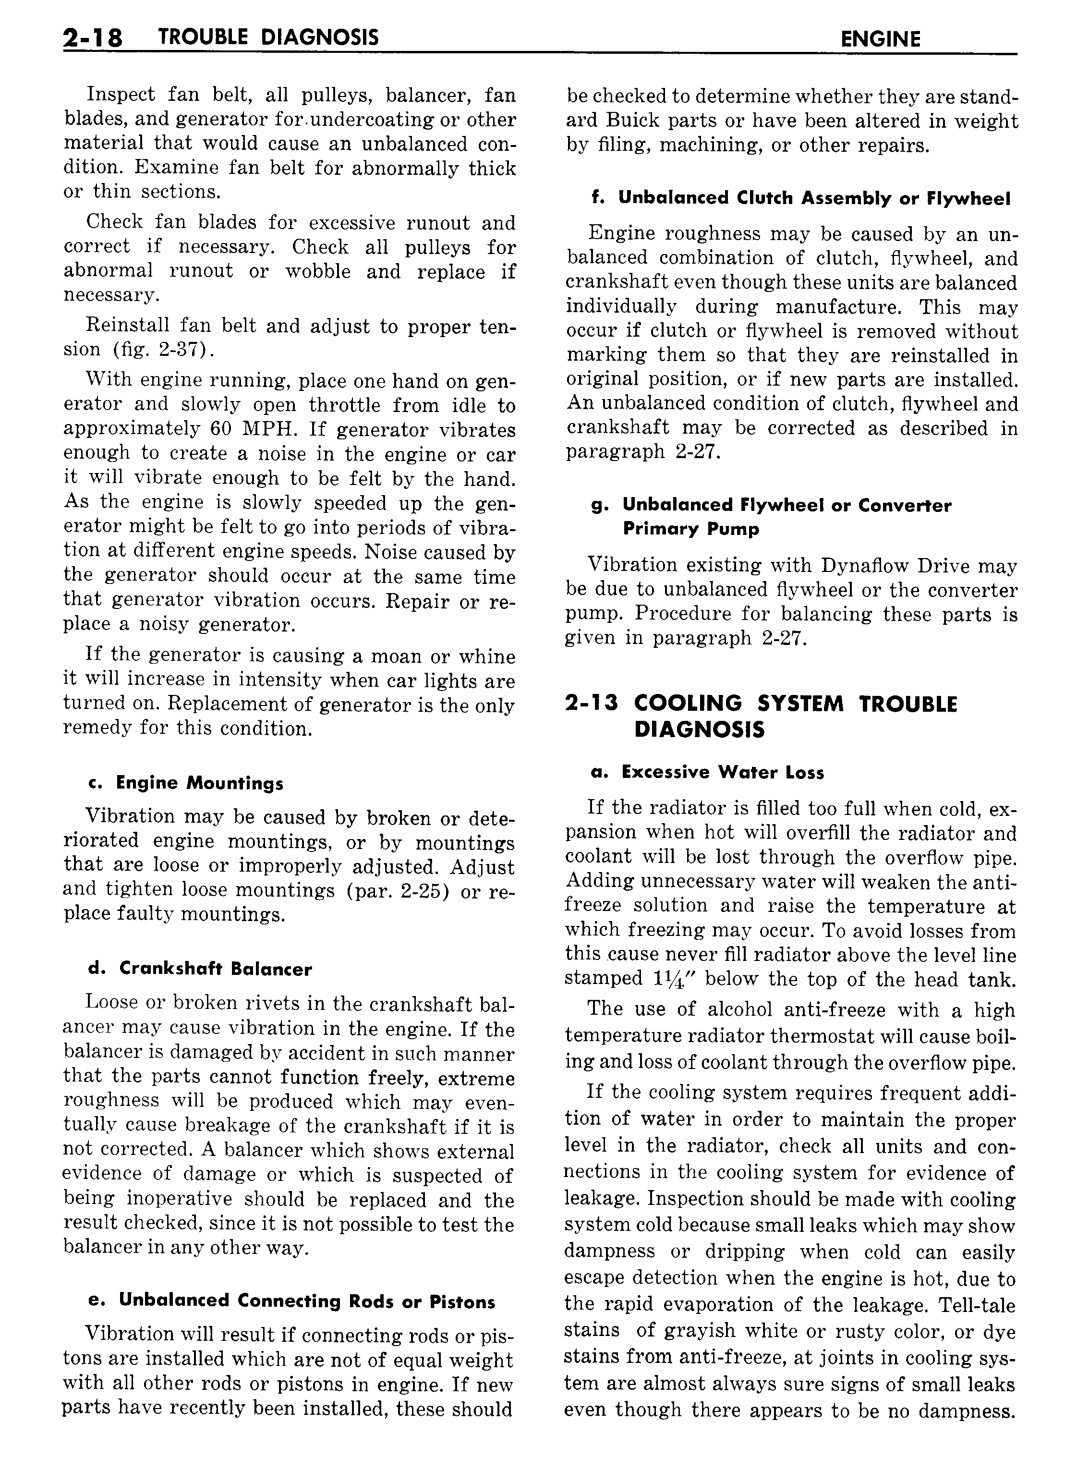 n_03 1957 Buick Shop Manual - Engine-018-018.jpg